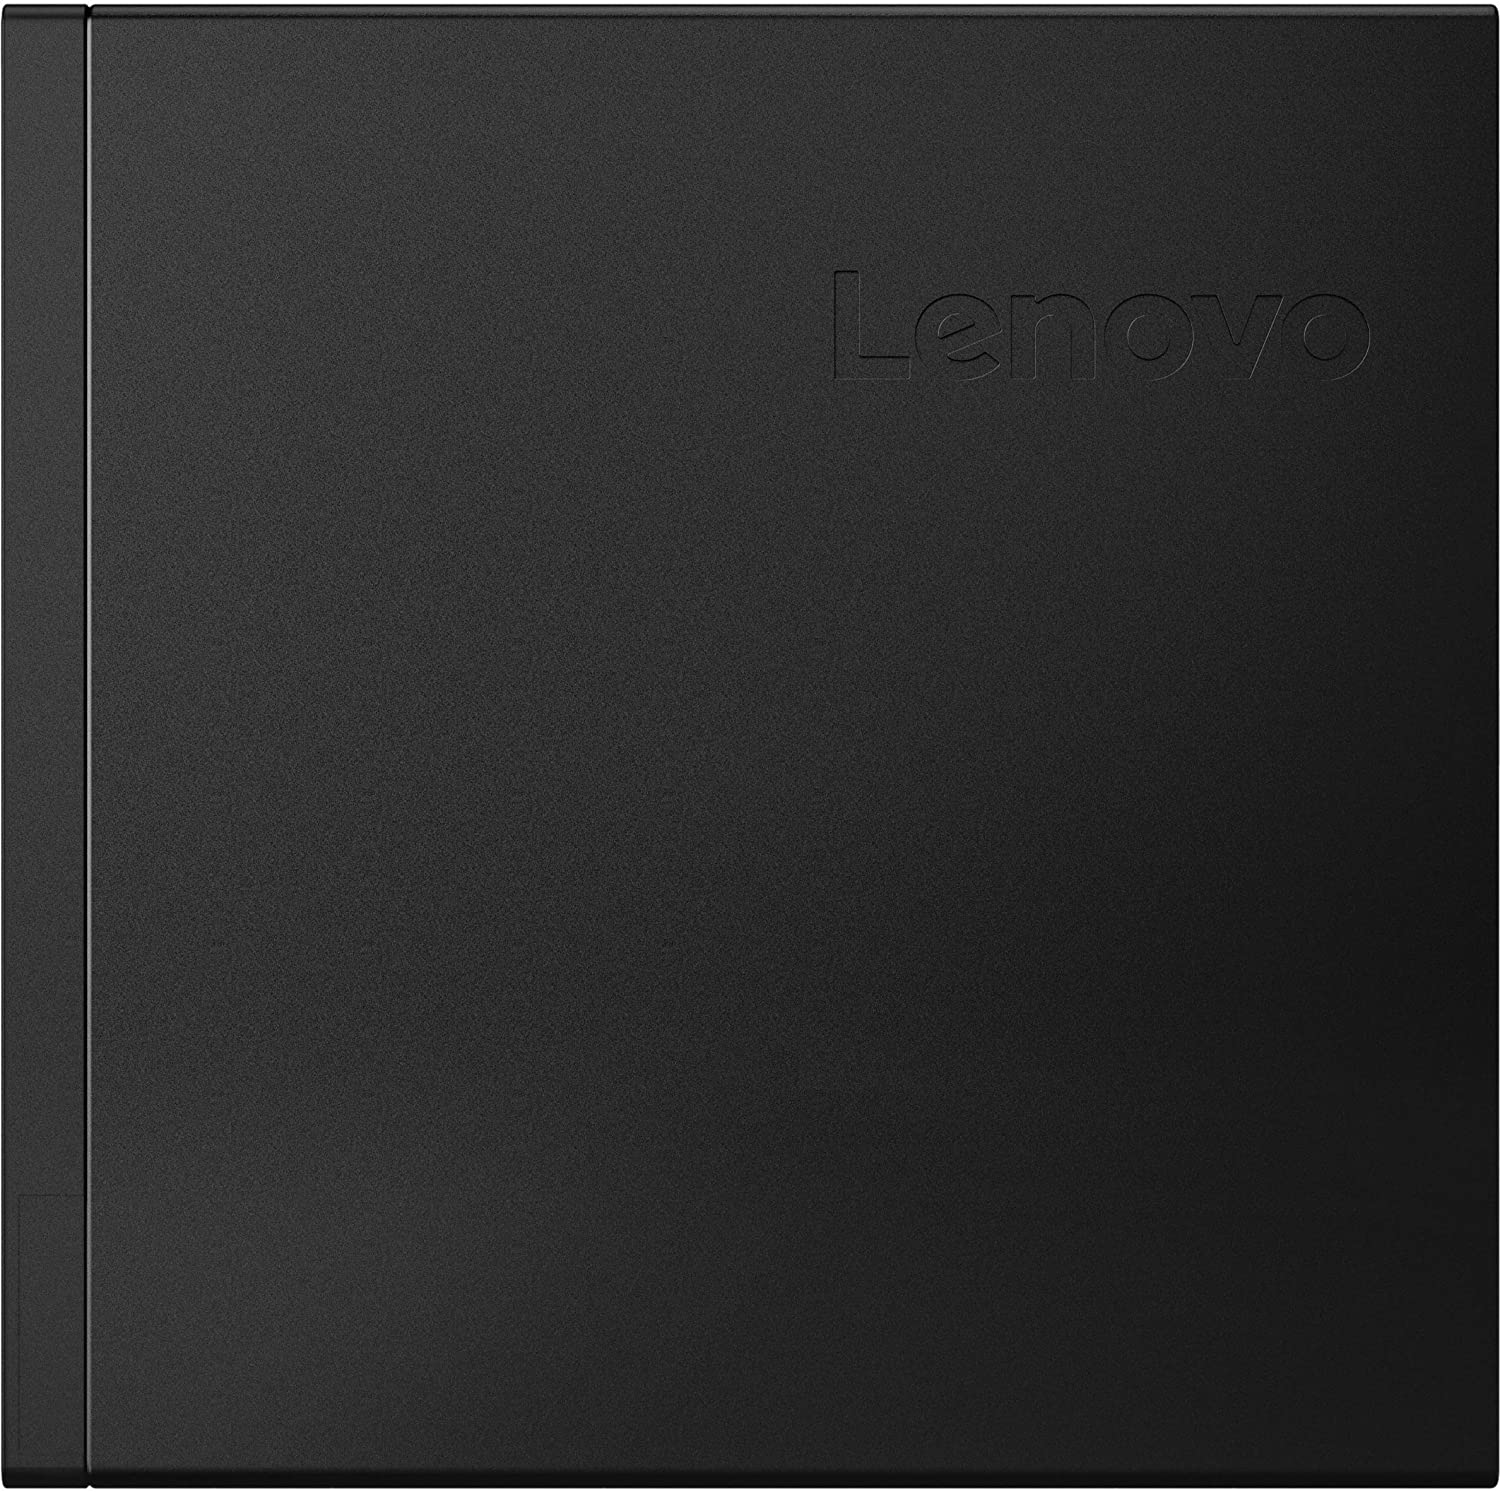 Lenovo ThinkCentre M625q Tiny Thin Client Desktop Computer